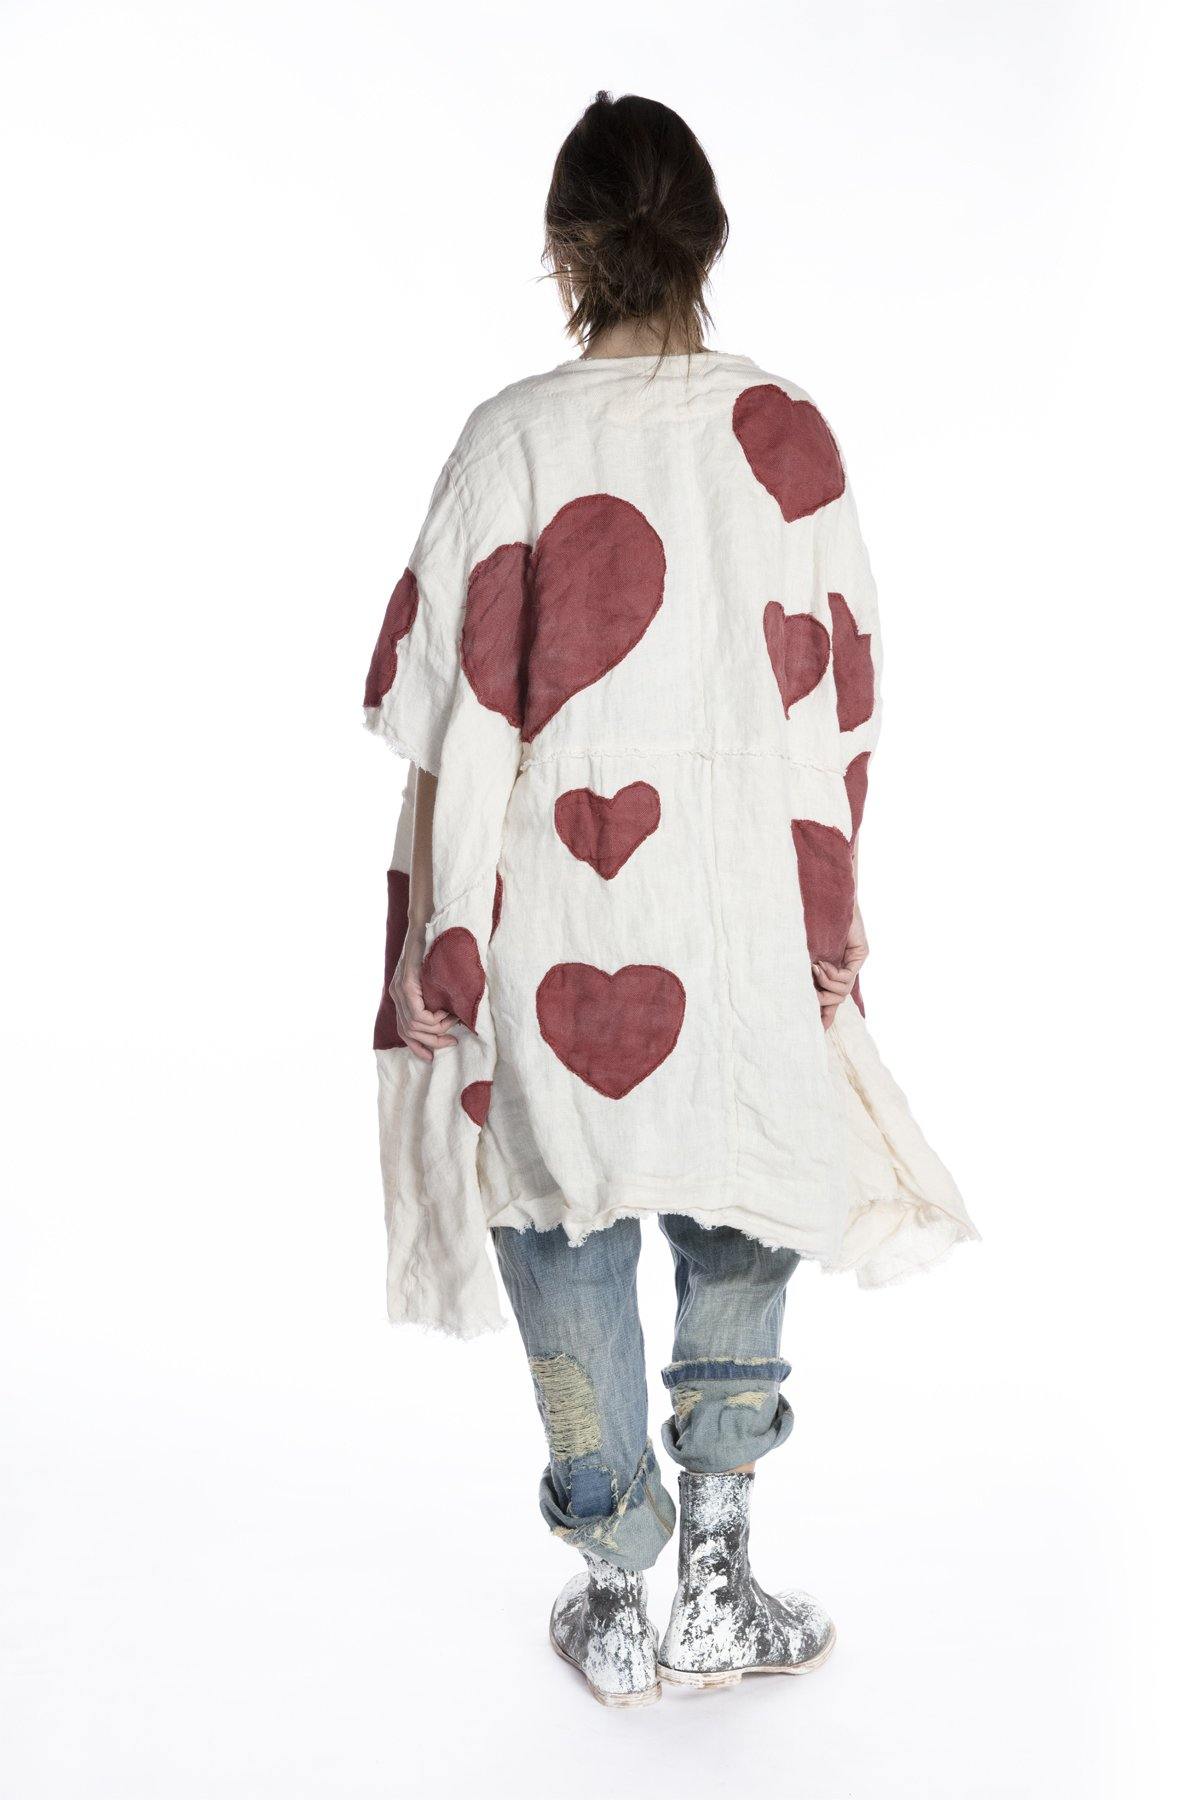 Magnolia Pearl Linen Heart Applique Kimi Koat Jacket 457